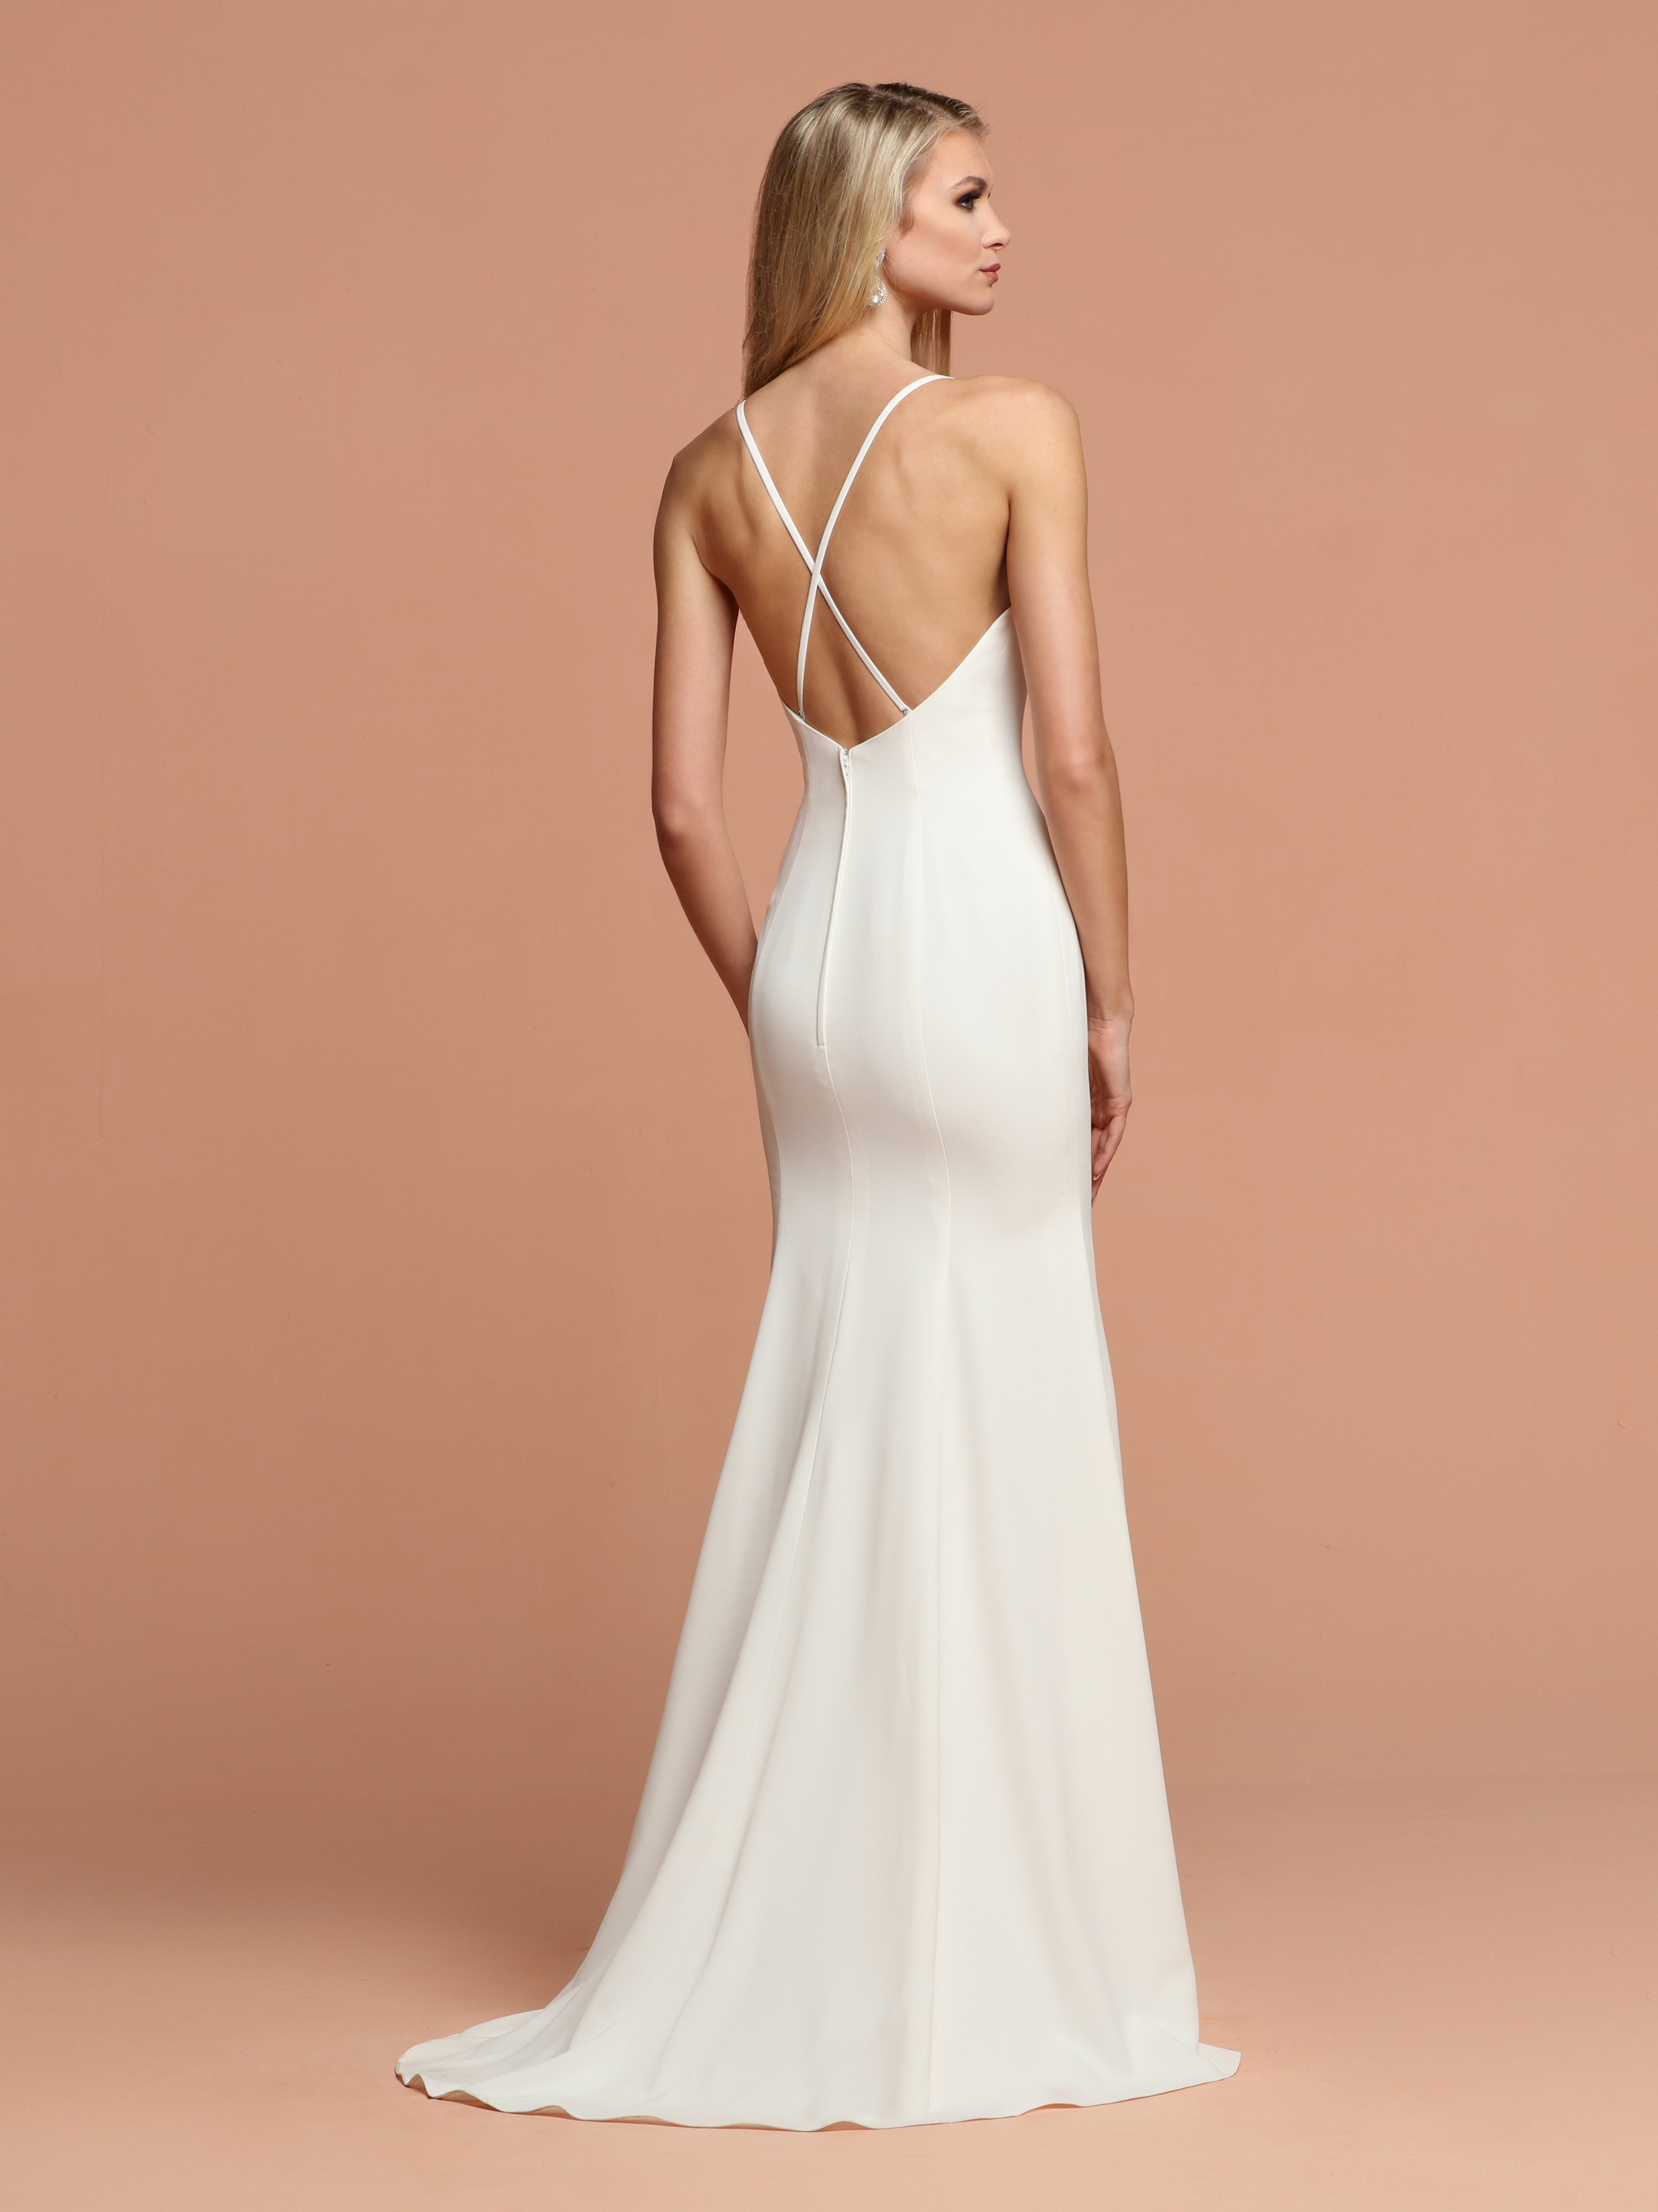 What Kind Of Slip Should You Wear Under A Wedding Dress - Florianni Weddings